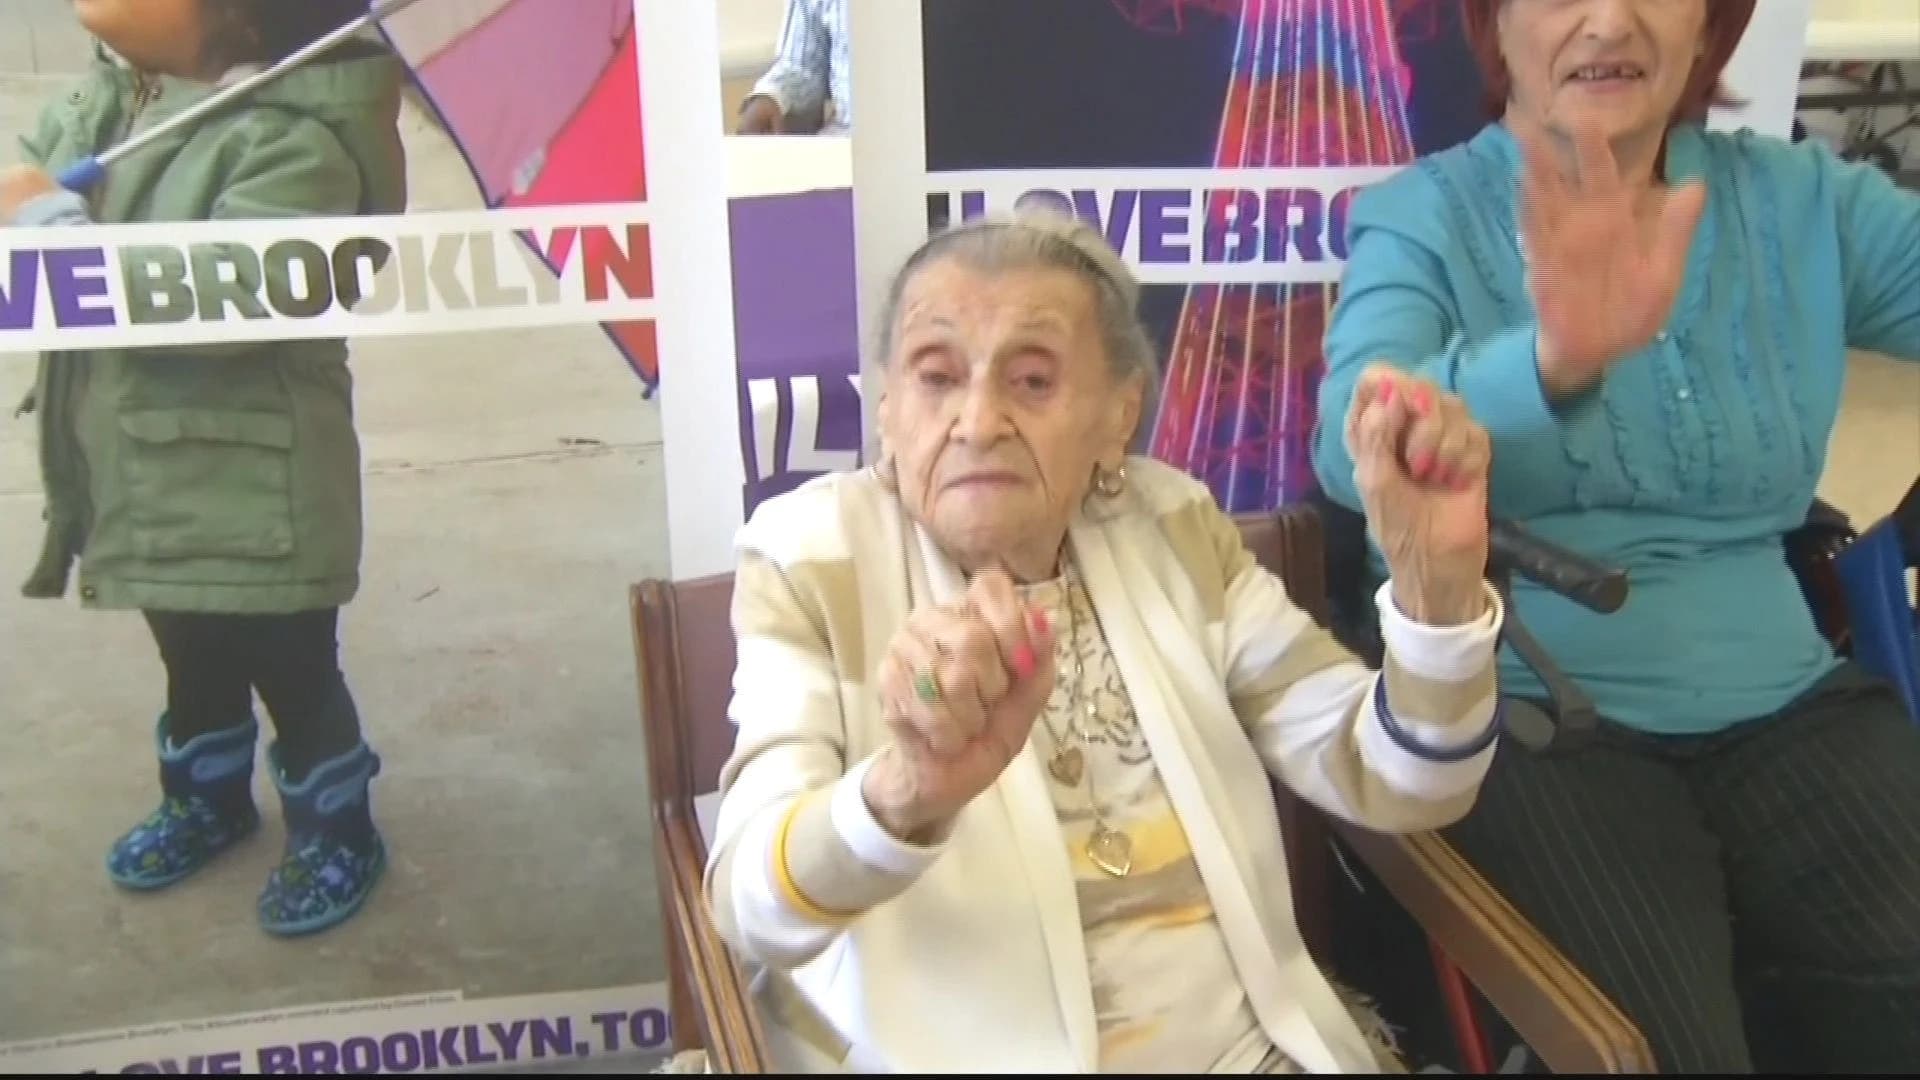 105-year-old woman walks her way to longevity